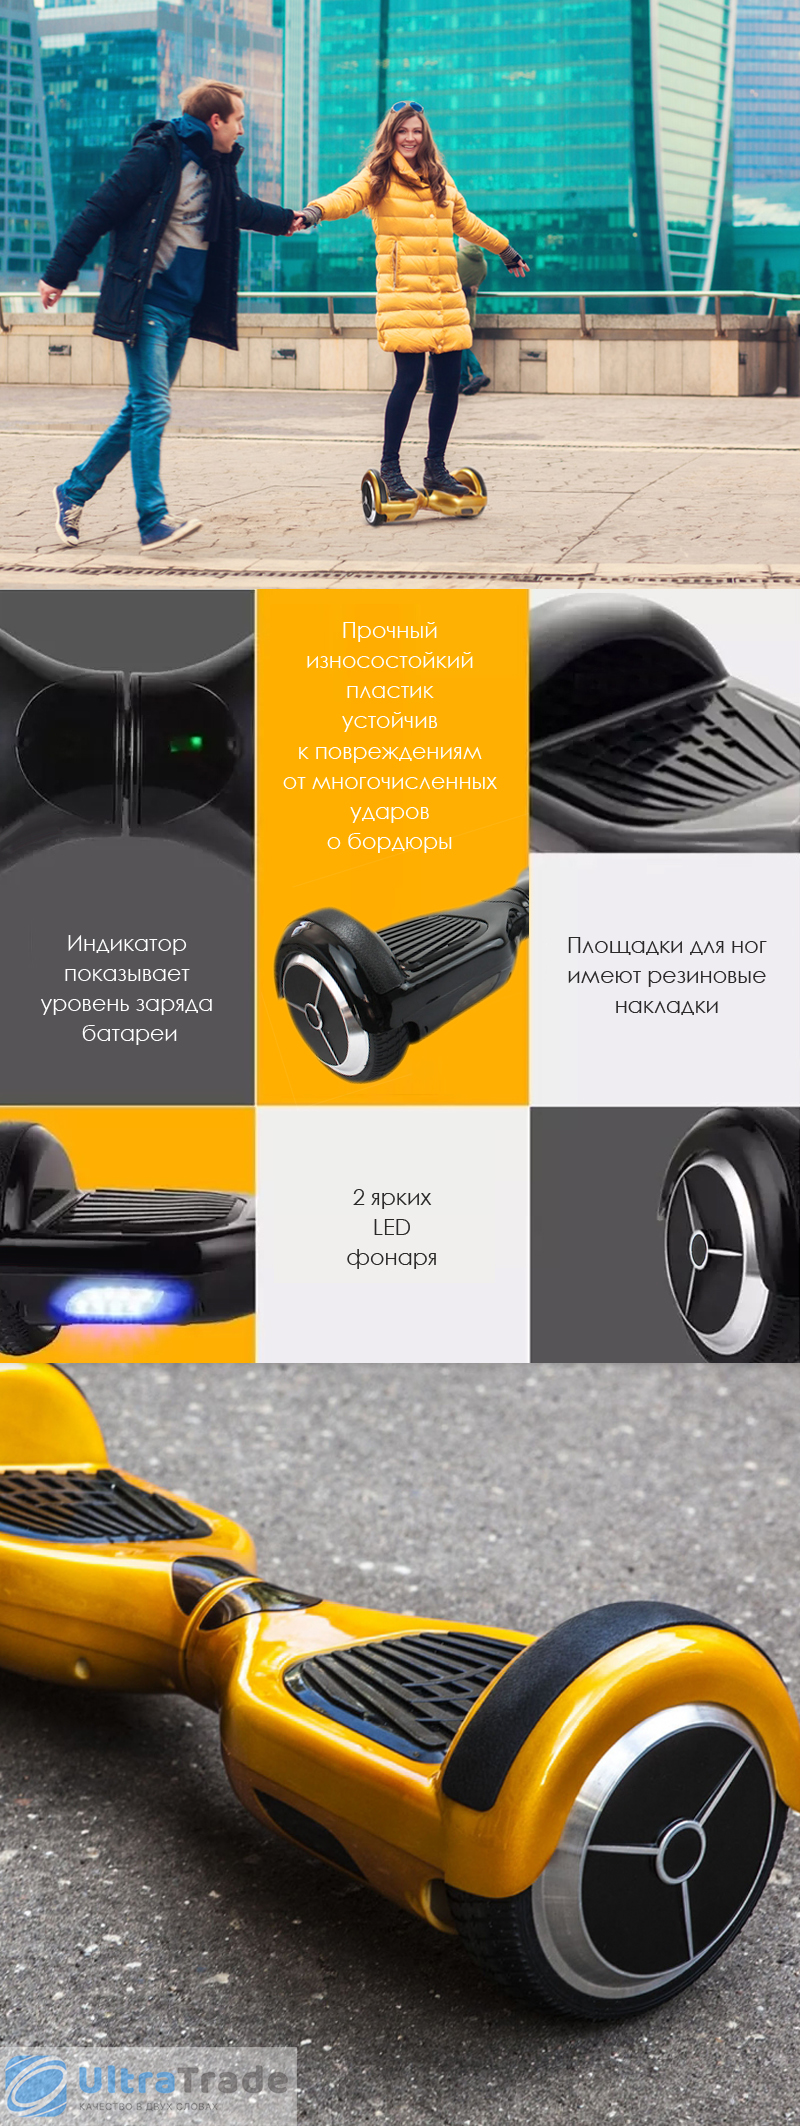 Гироскутер Мини Сегвей Smart Balance Wheel 6.5 with Bluetooth Зеленый